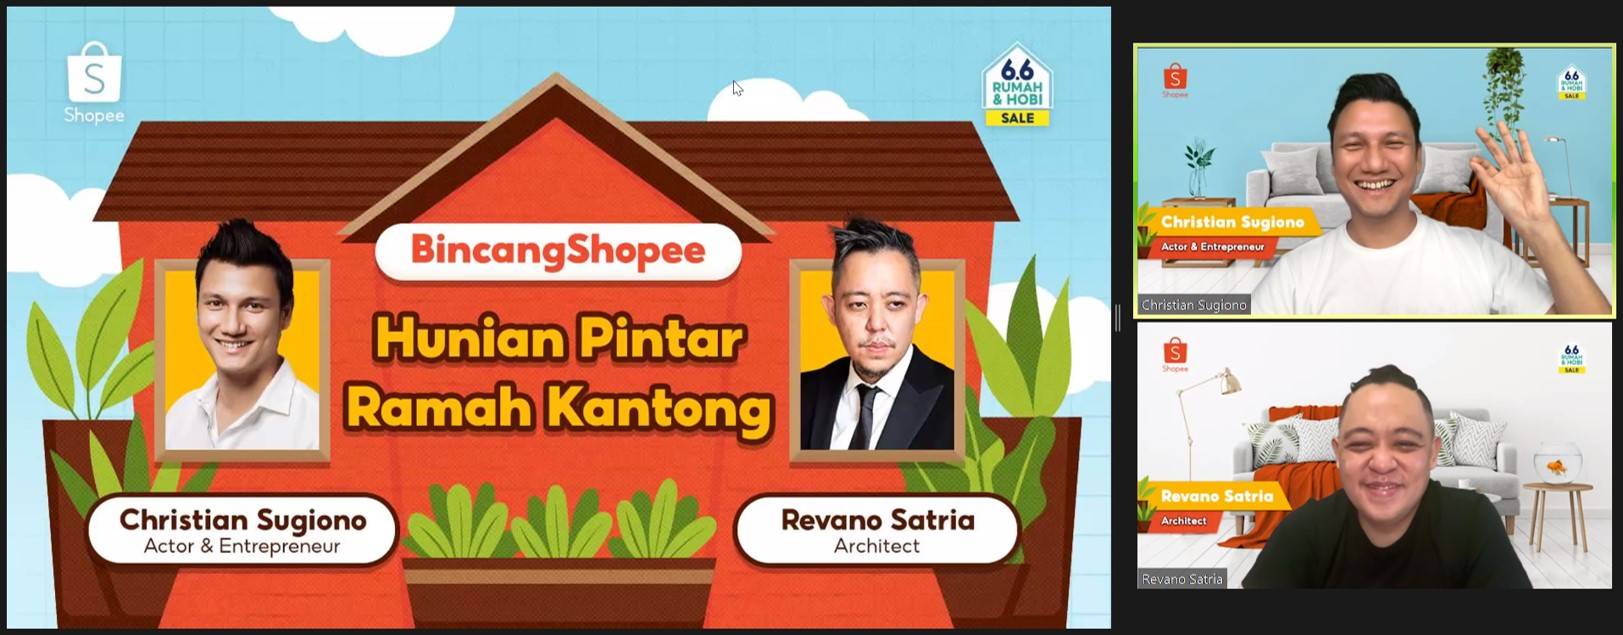 Shopee Hadirkan Bincang Shopee 6.6 Rumah dan Hobi Sale Hunian Pintar Ramah Kantong